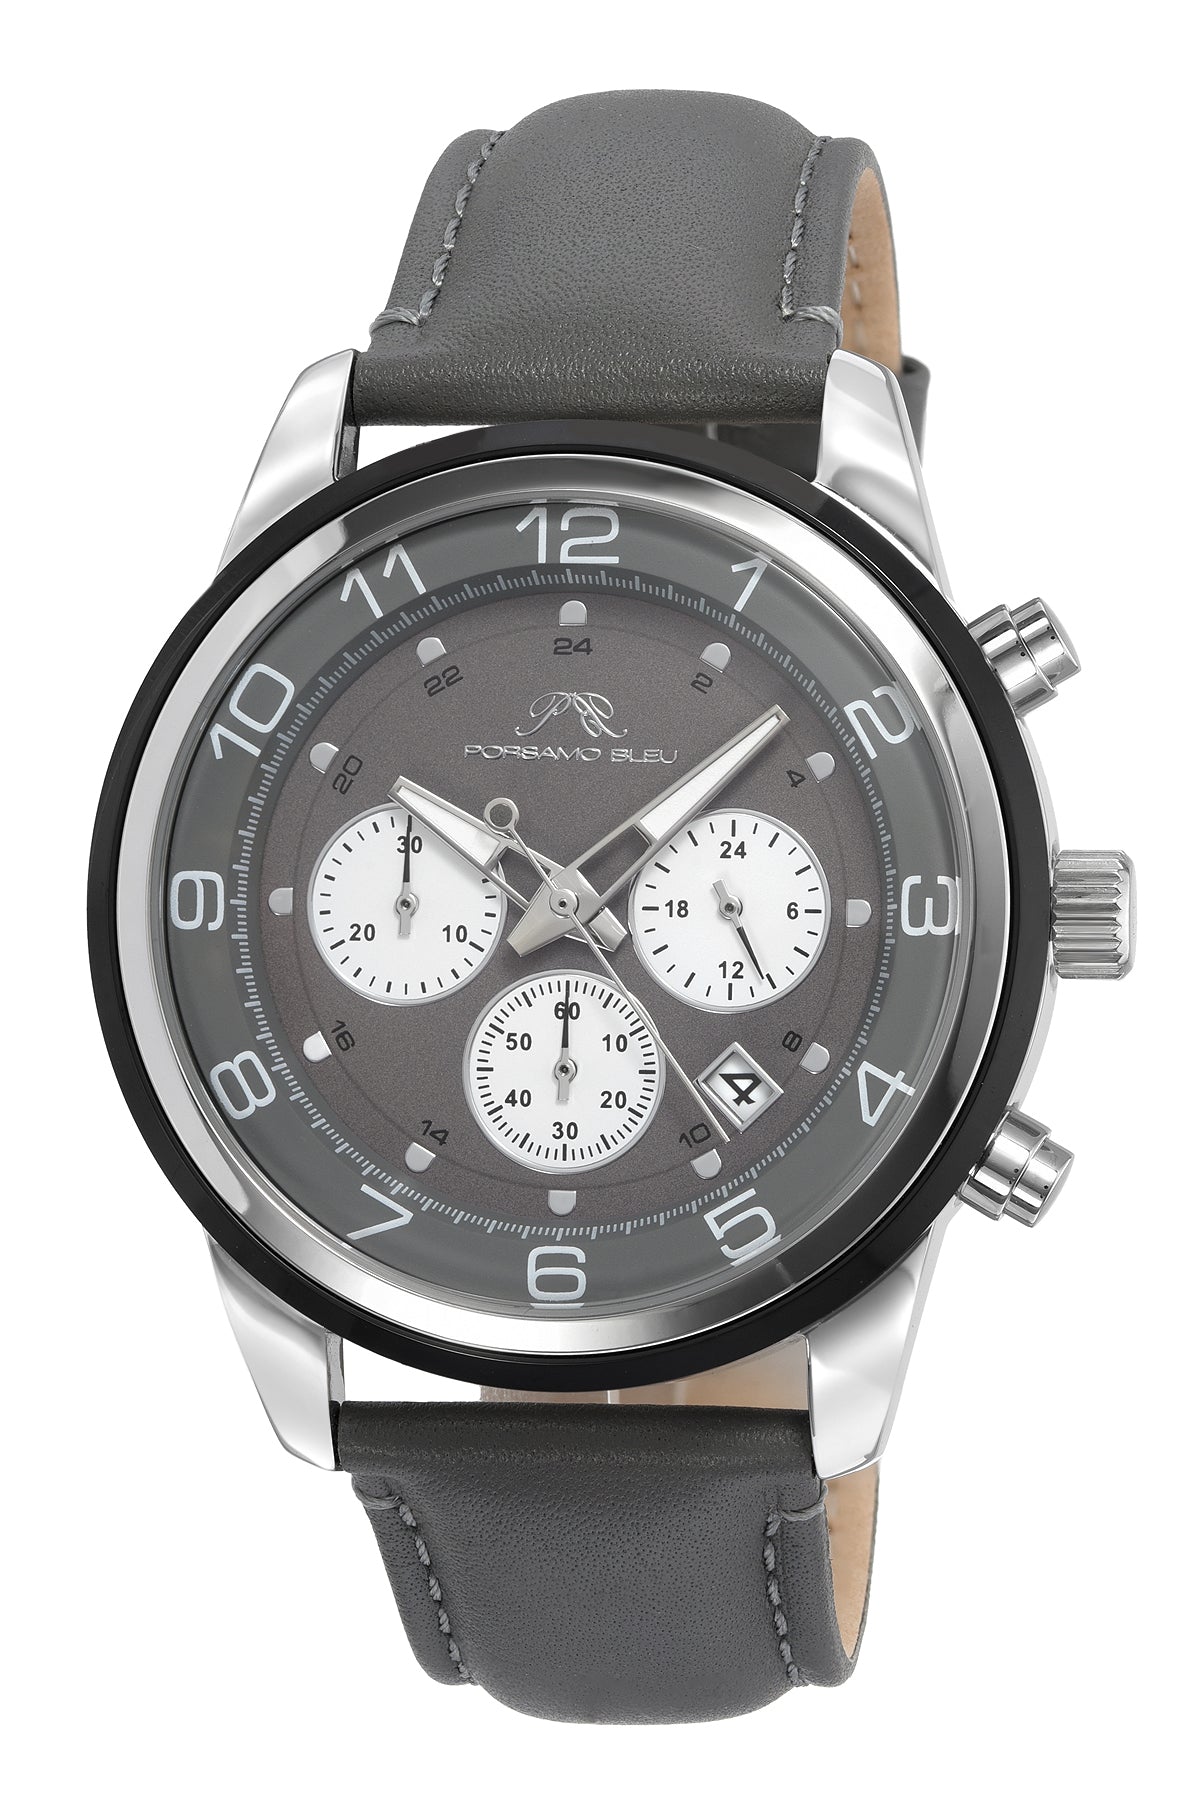 Porsamo Bleu Arthur Luxury Chronograph Men's Stainless Steel Watch, Silver, Grey 1091EARL